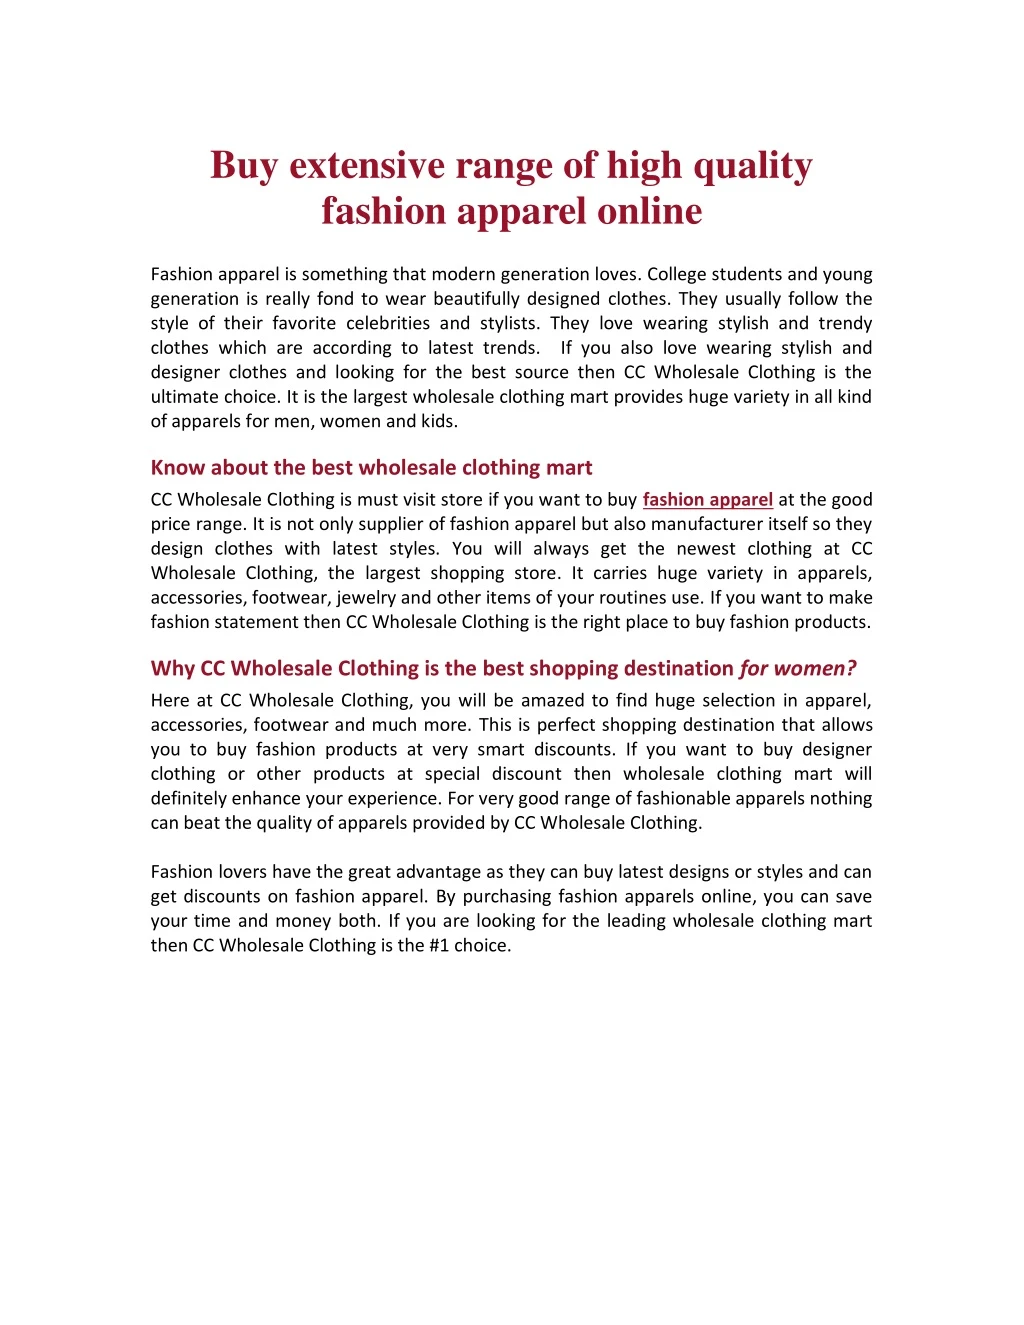 buy extensive range of high quality fashion